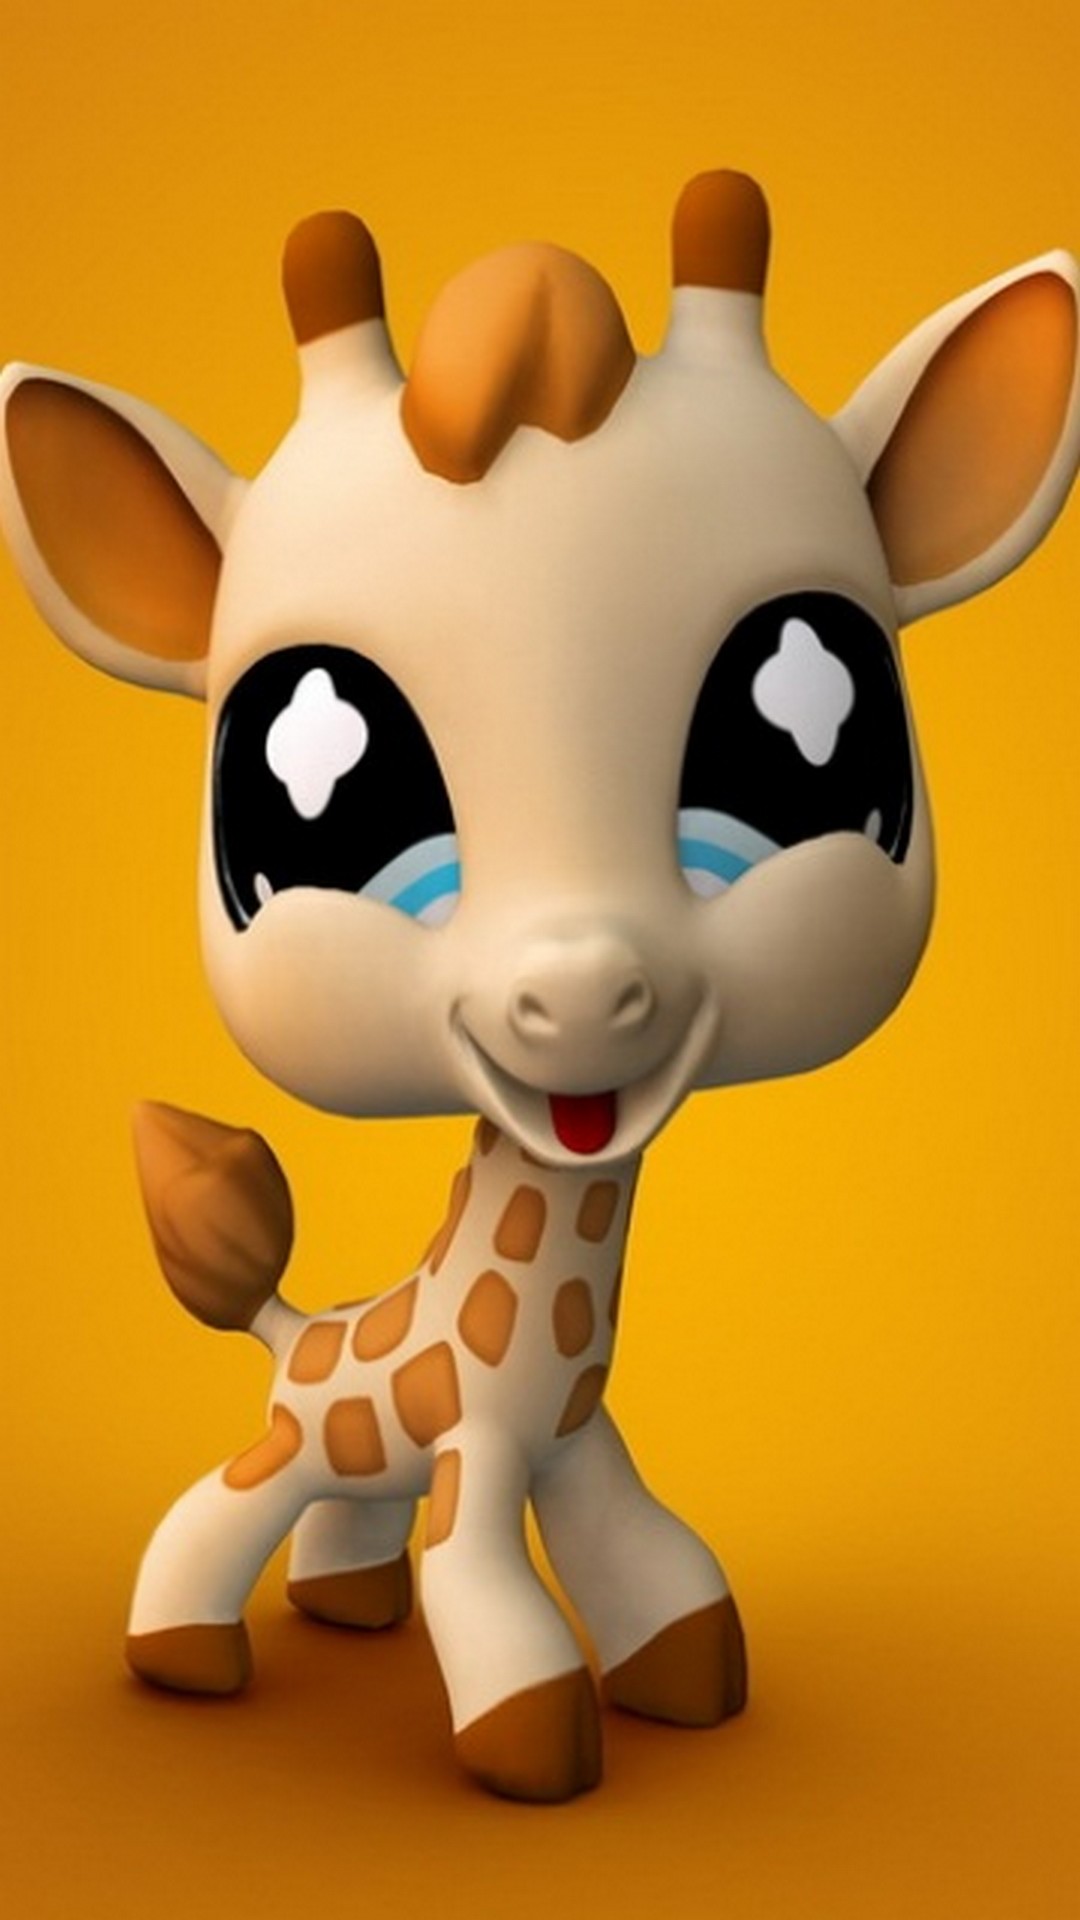 Cute Giraffe Wallpaper iPhone Resolution 3D Animation Wallpaper For iPhone